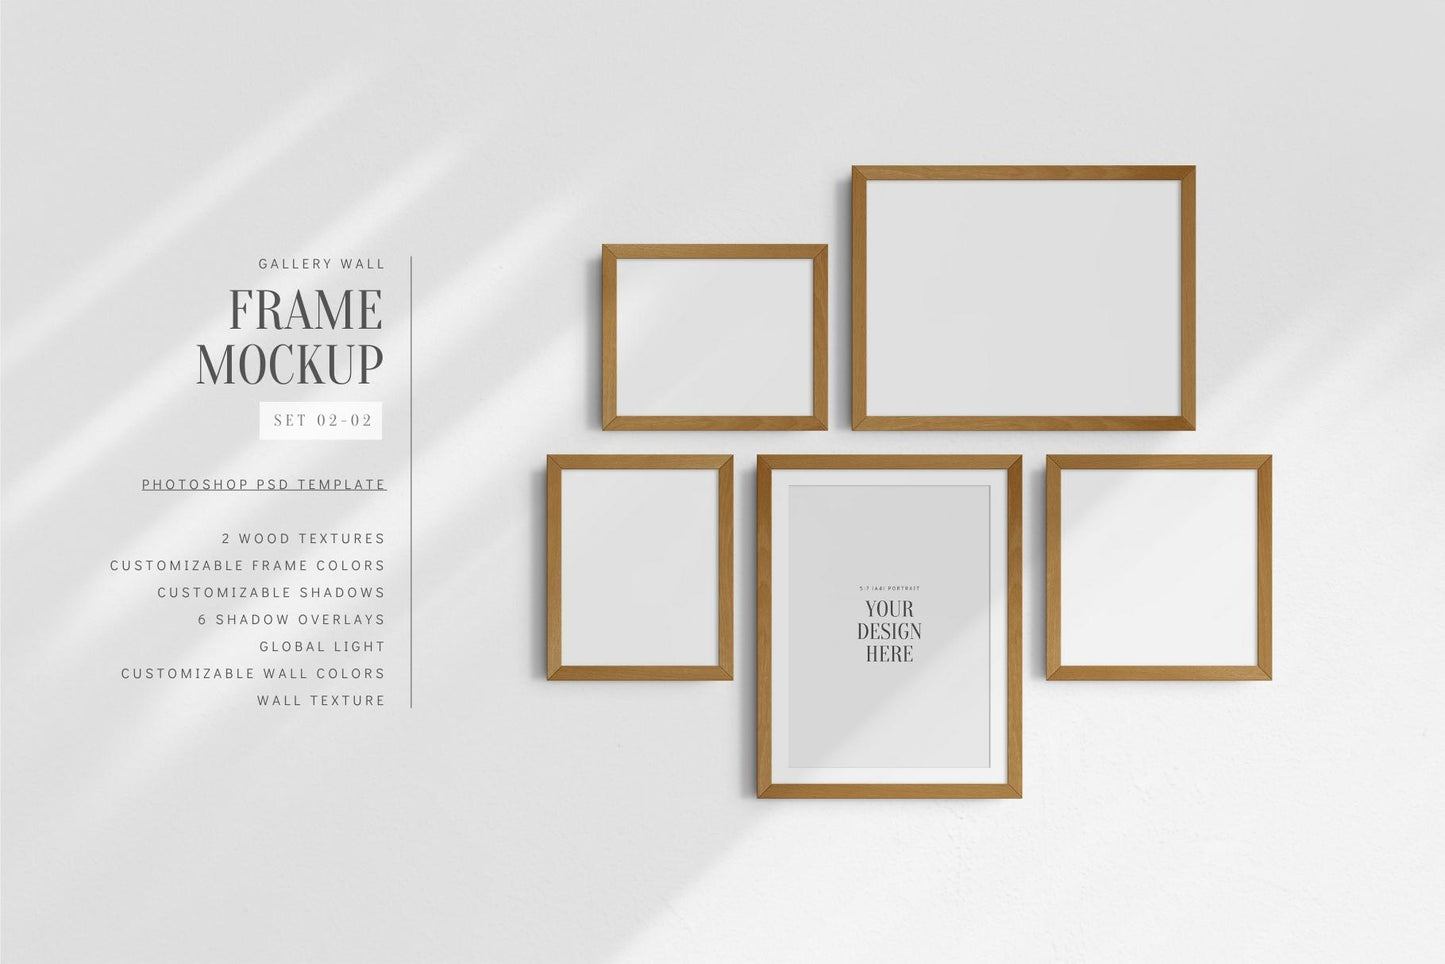 Gallery Wall Mockup | Set of 5 Frames | Frame Mockup | PSD | Editable, Customizable